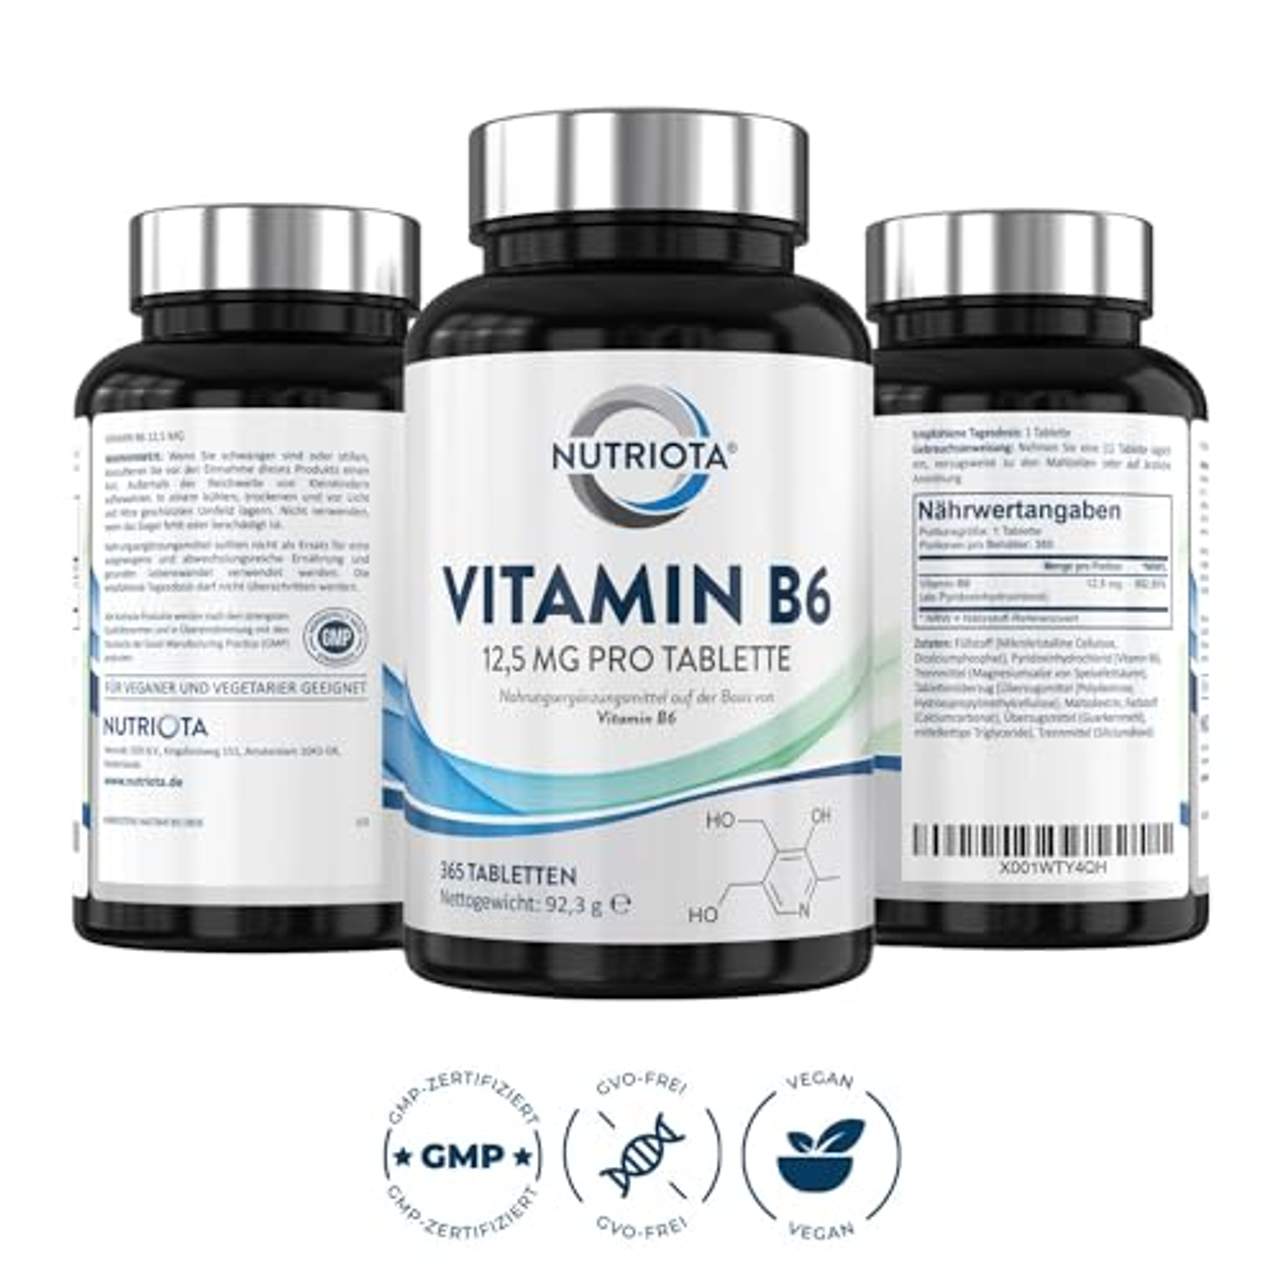 Aceso Vitamin B6 50mg